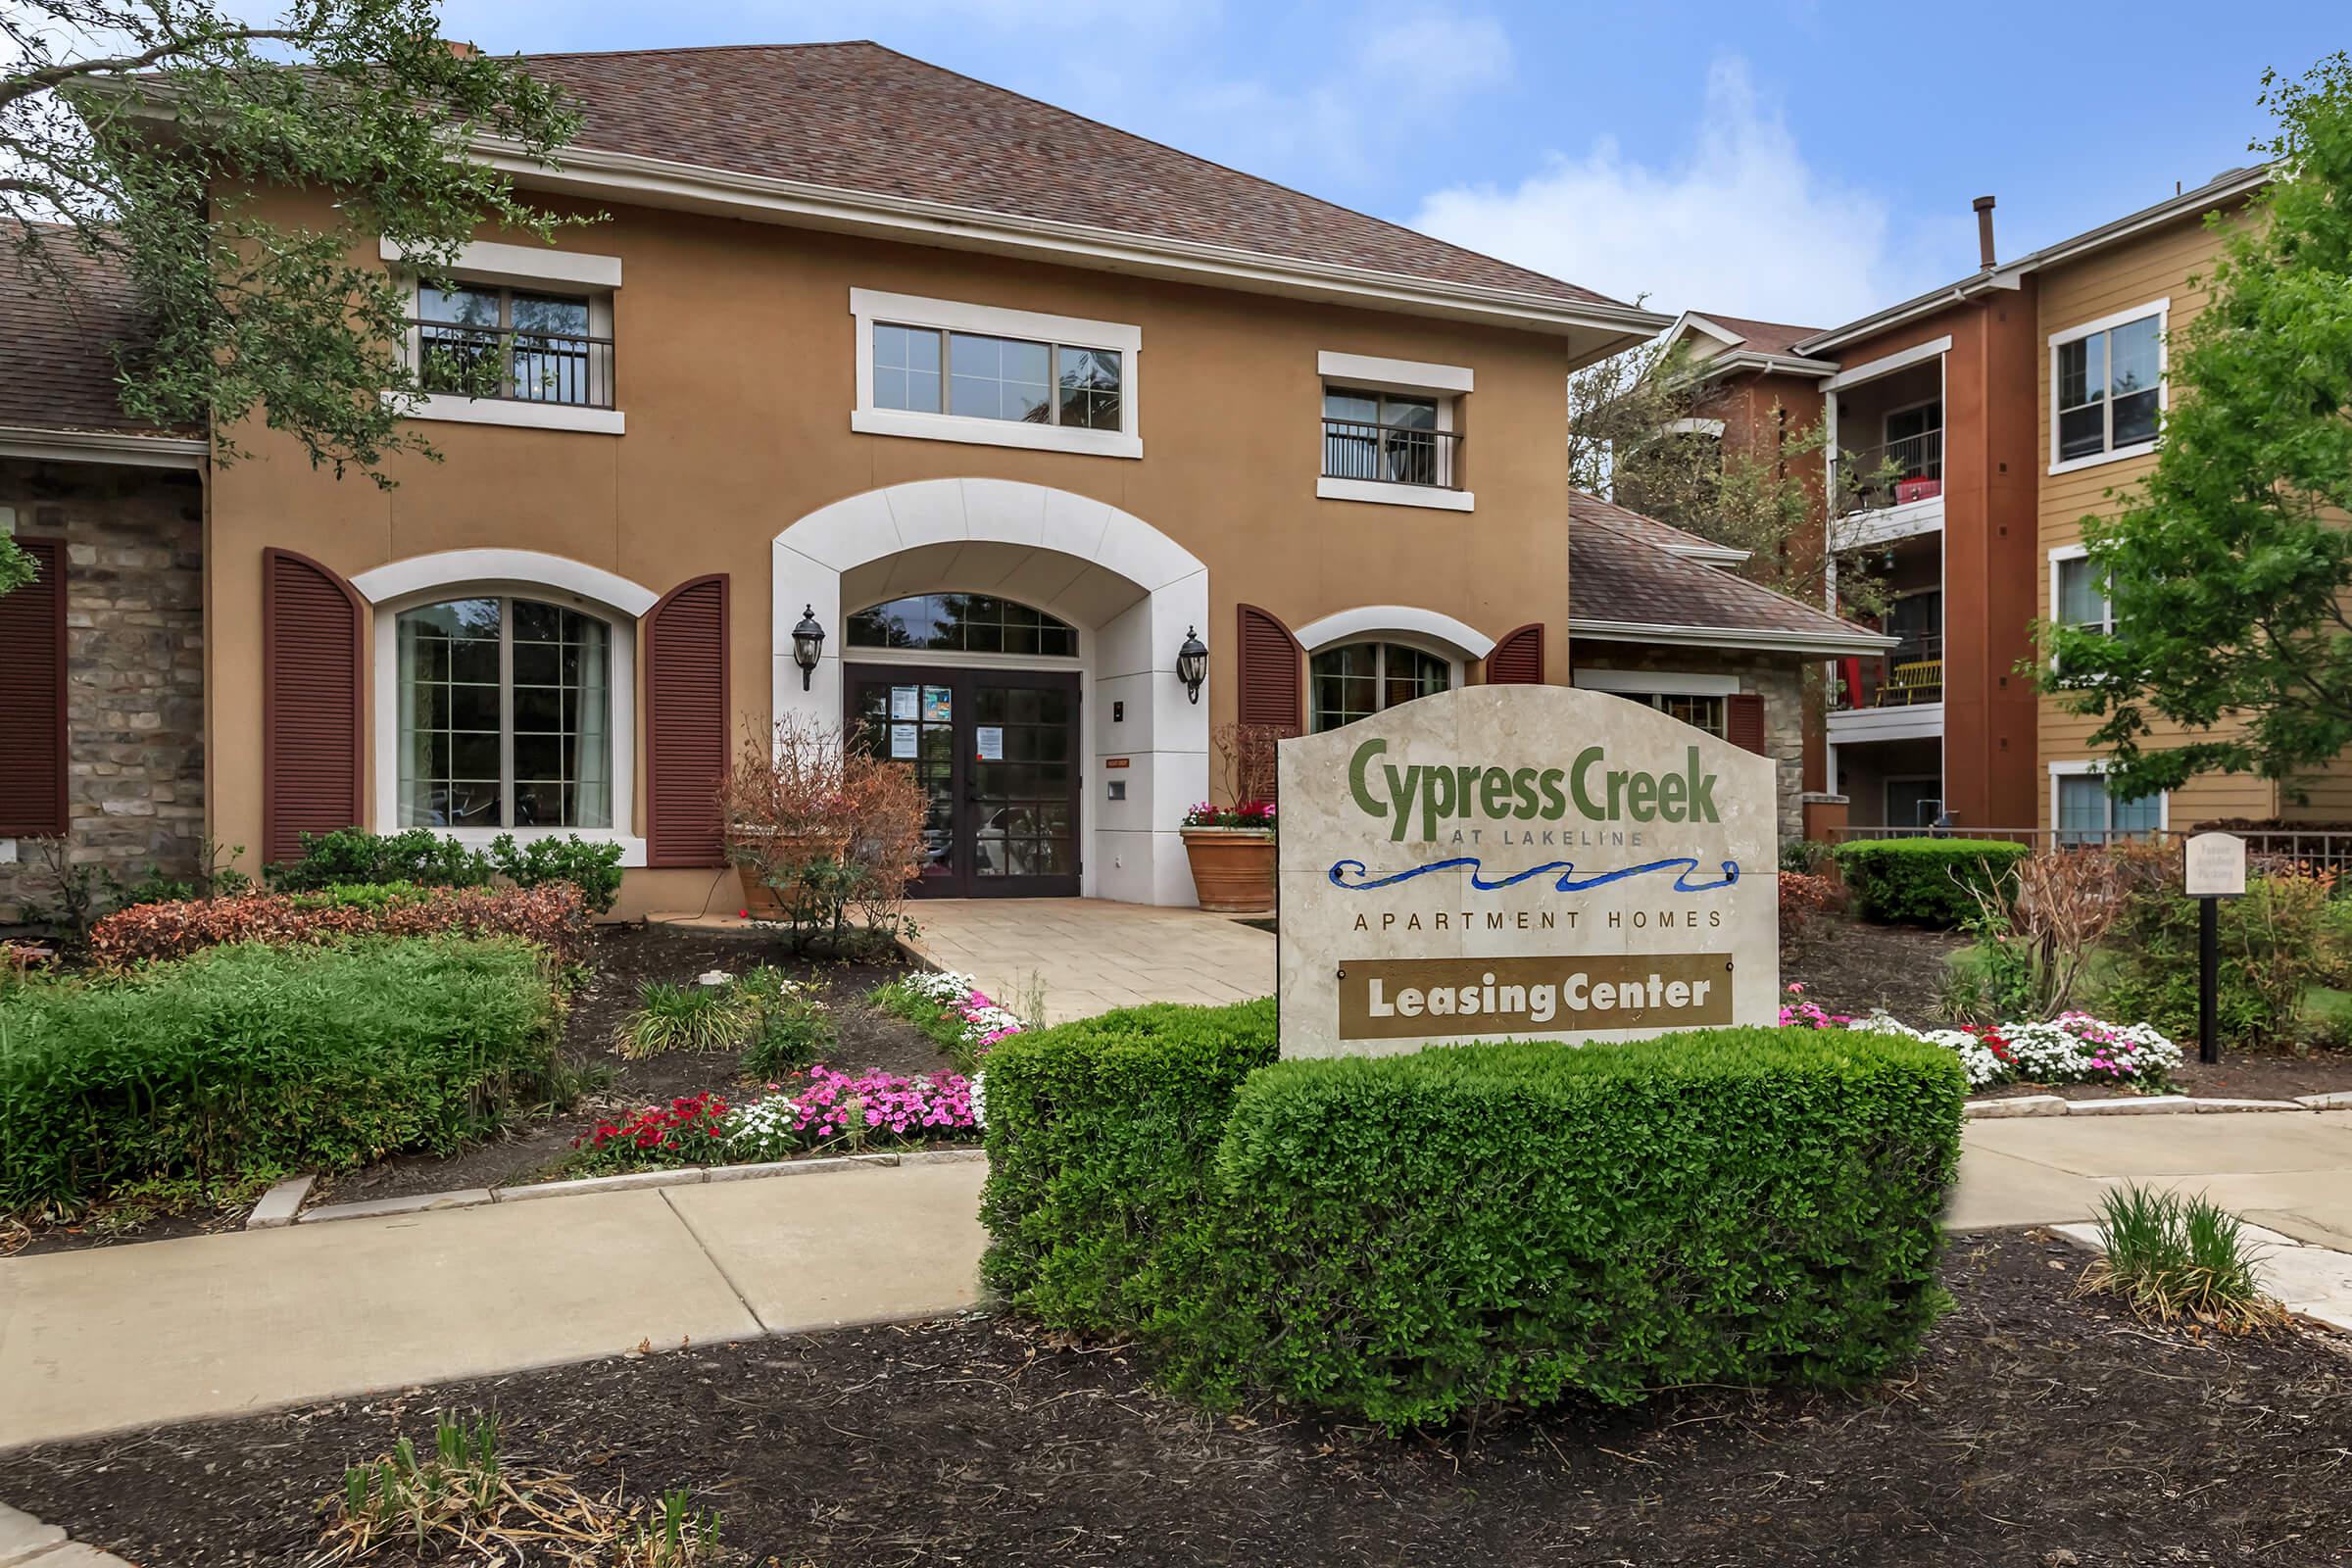 We Hope to See You Soon at Cypress Creek Apartment Homes at Lakeline Boulevard